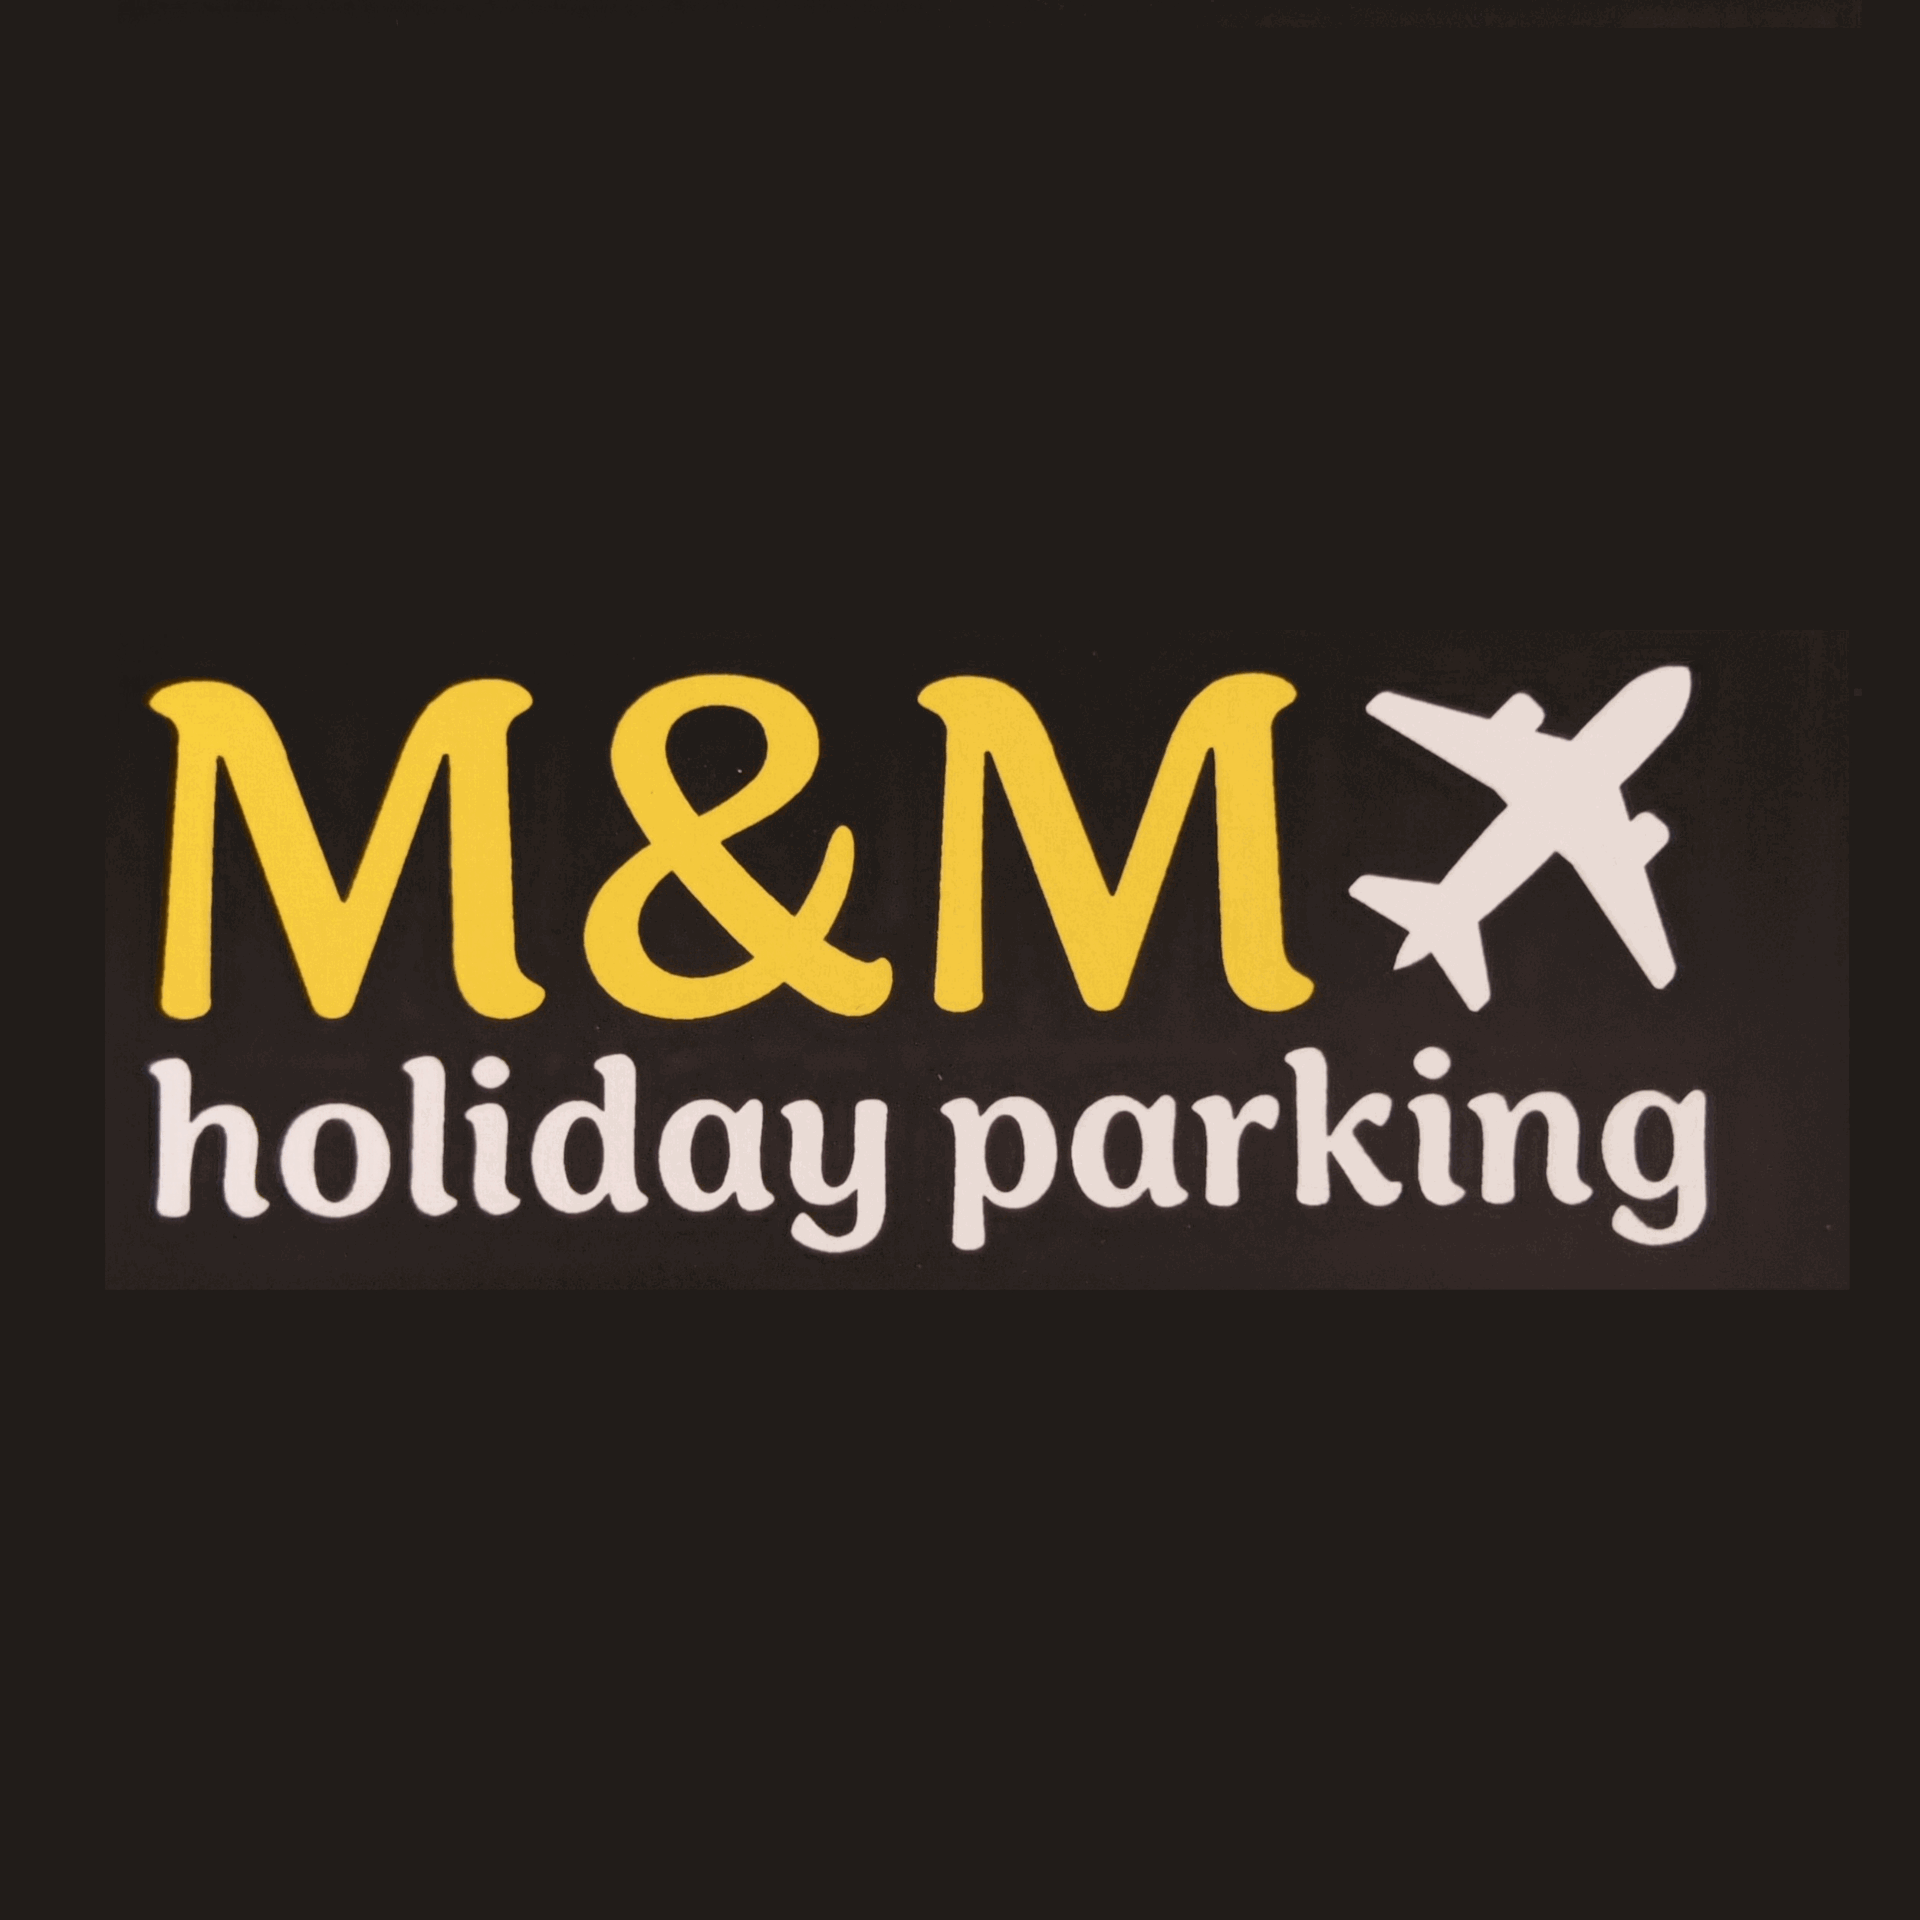 M&M Holidayparking Leipzig logo